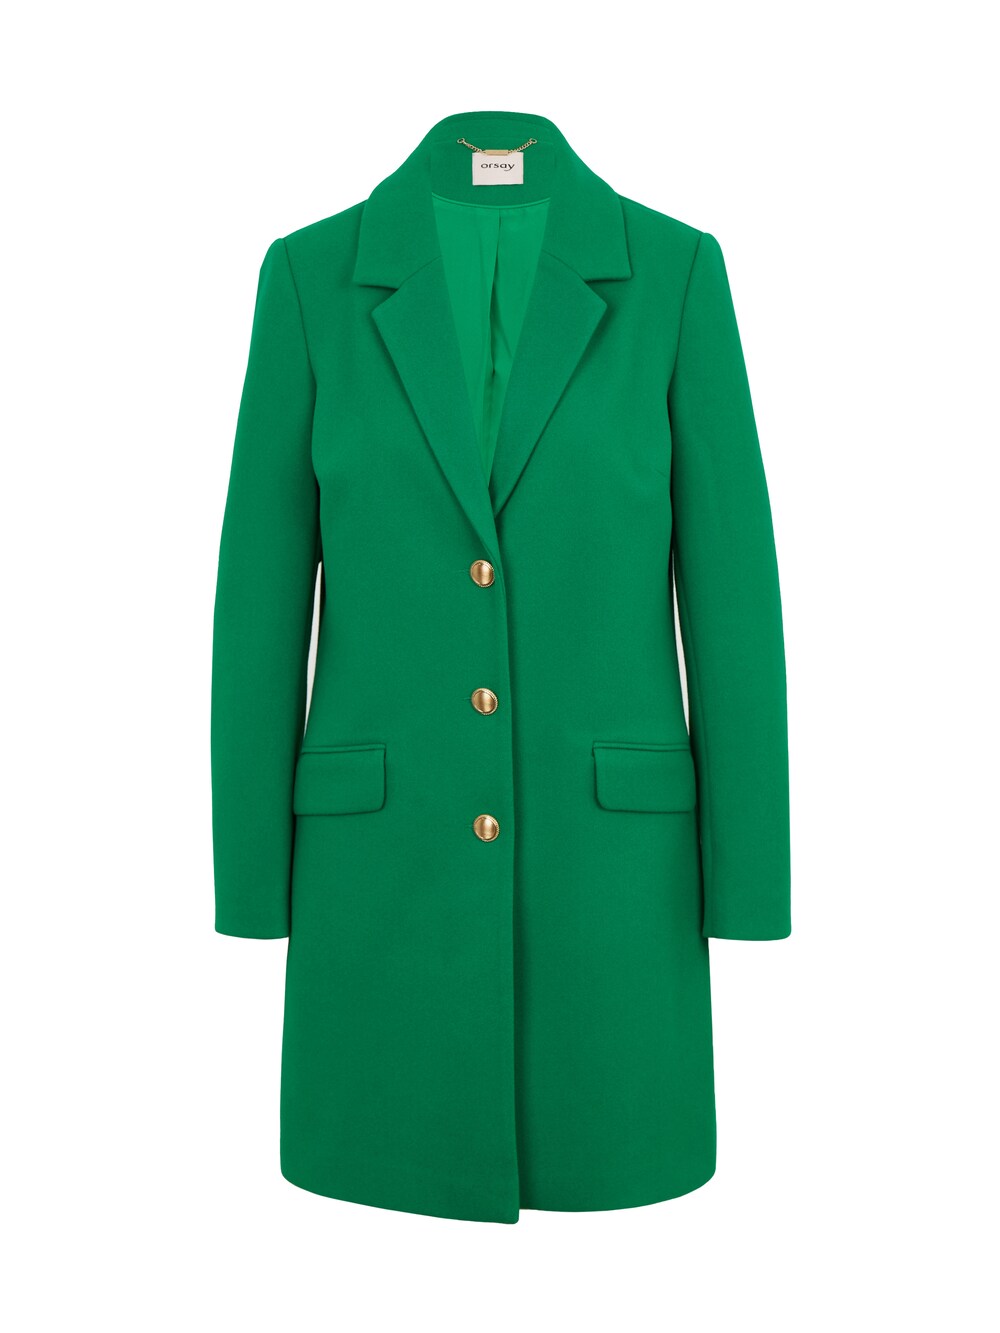 Межсезонное пальто Orsay, зеленый